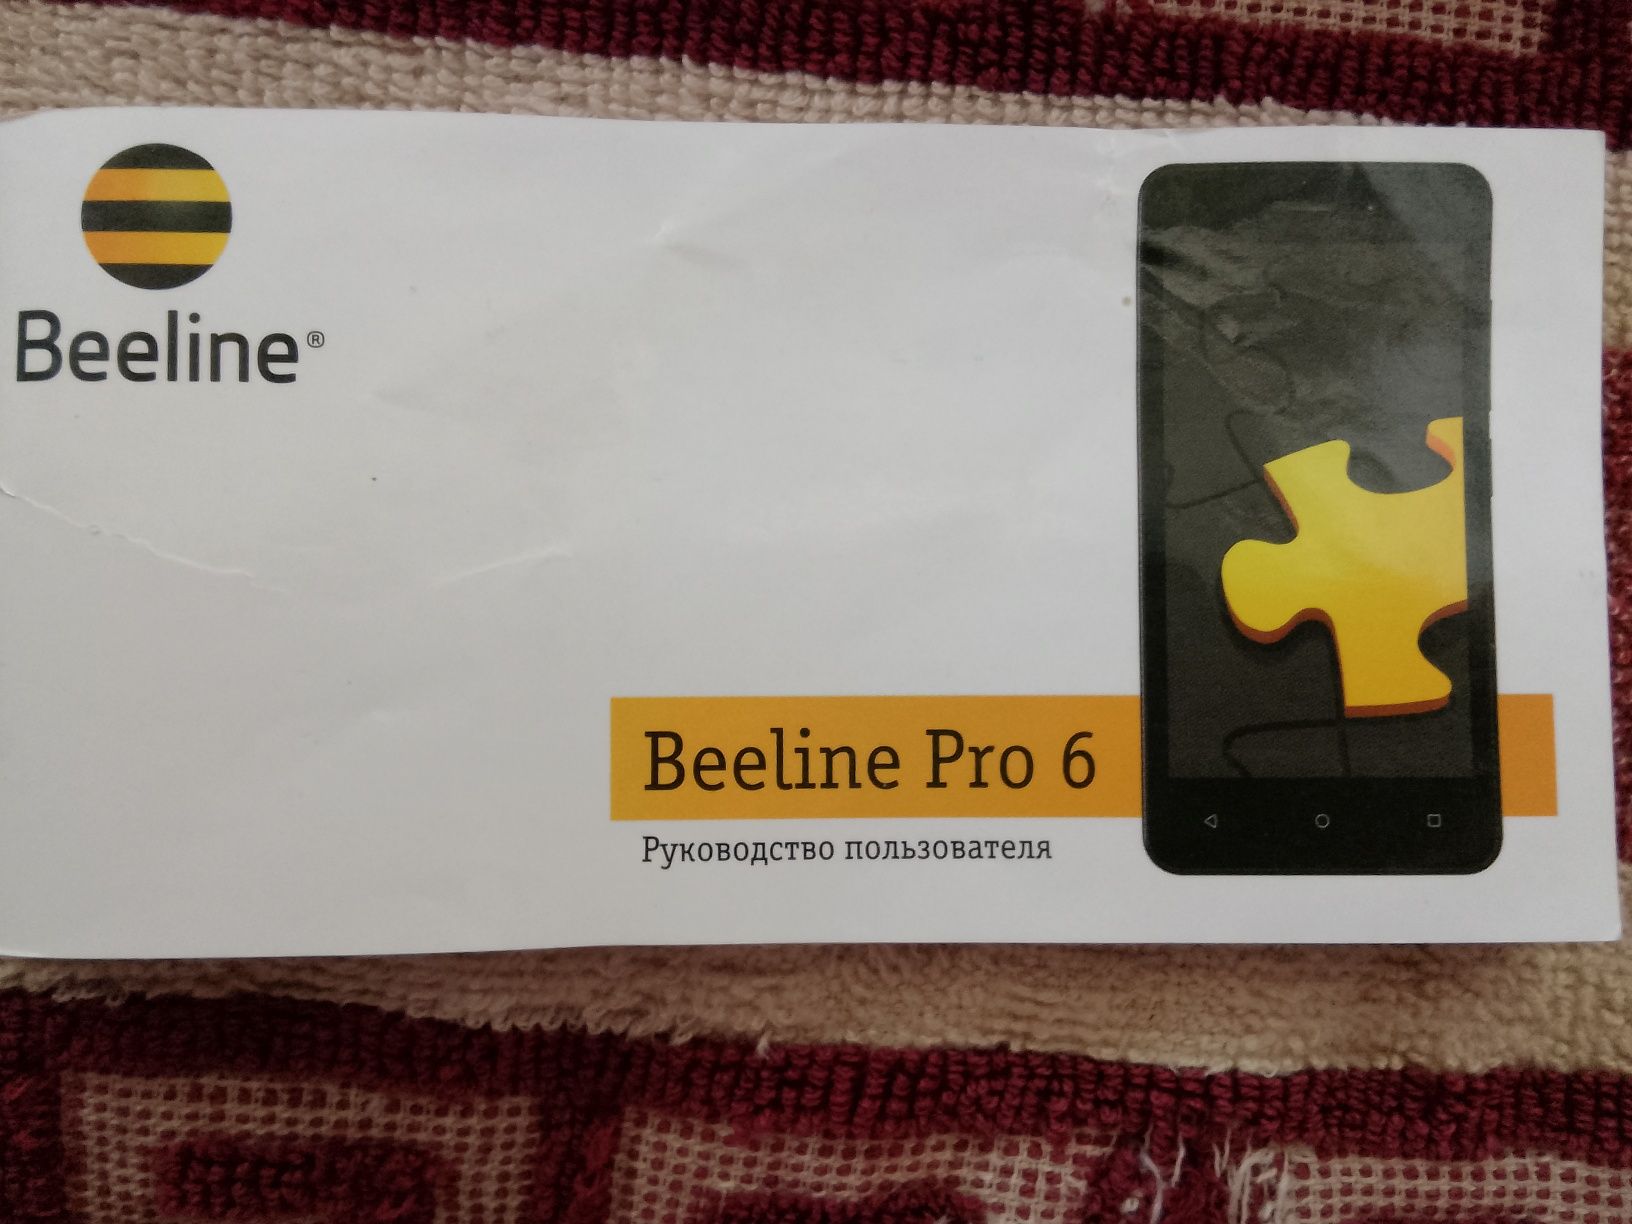 Beeline pro 6 android